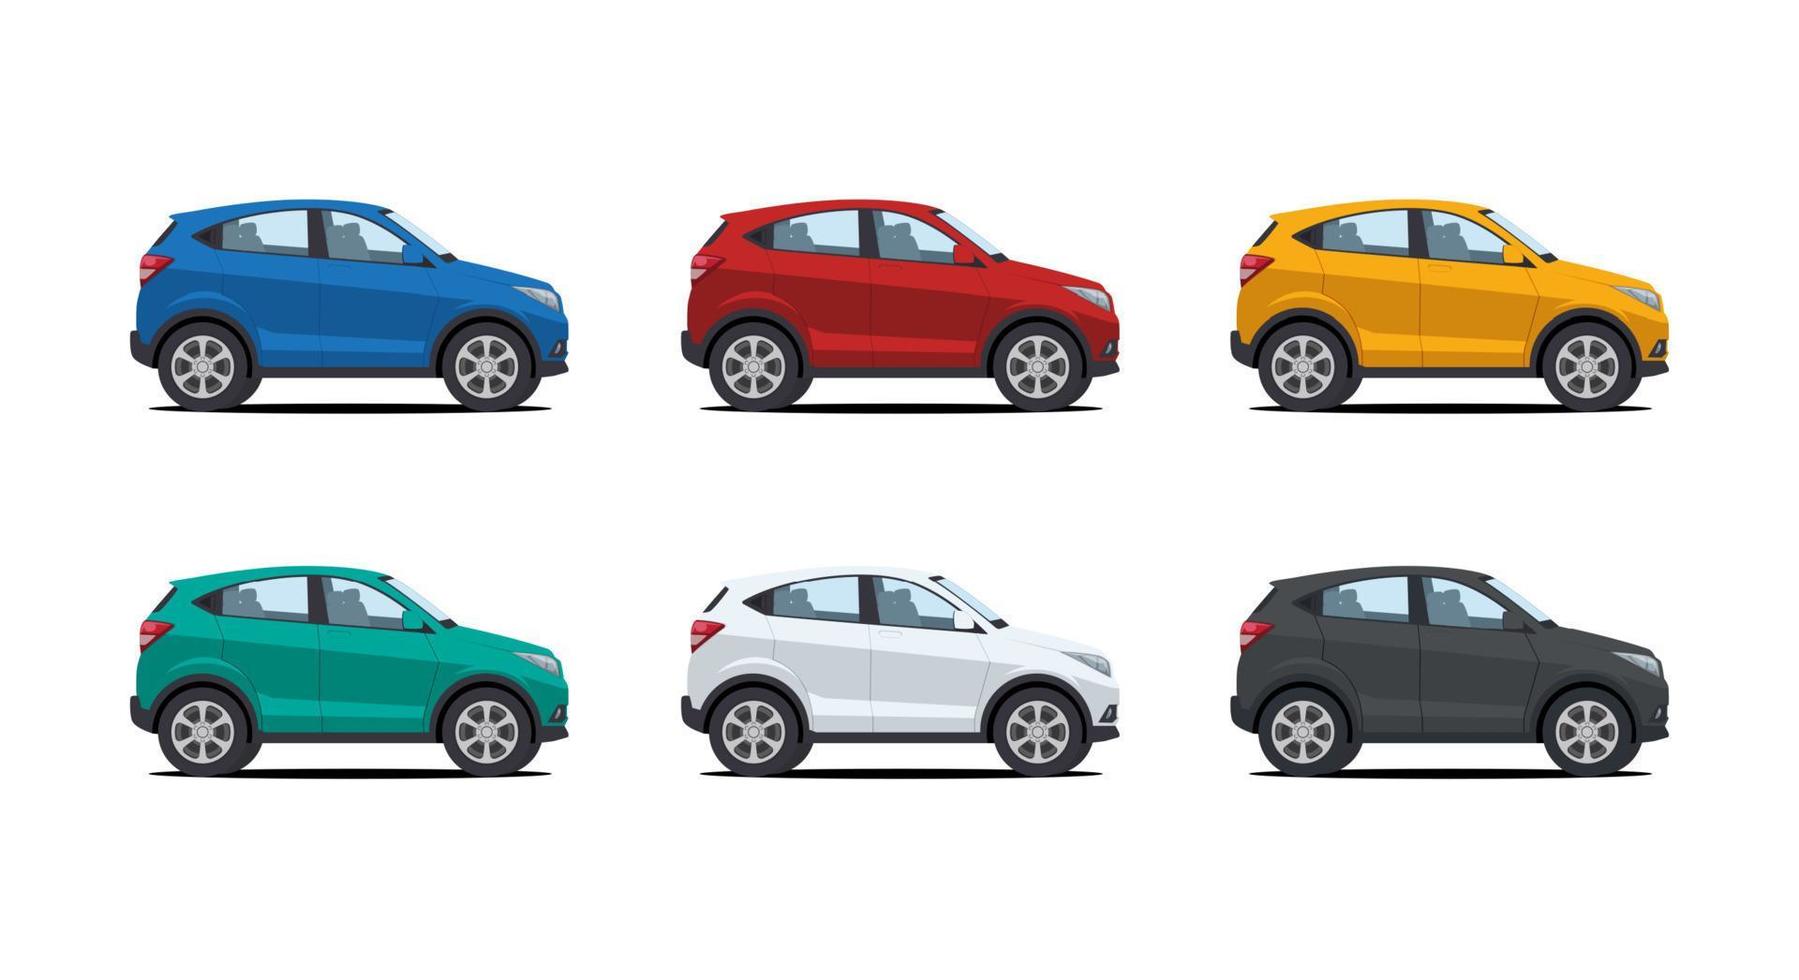 set of suv cartoon car in various color vector illustration